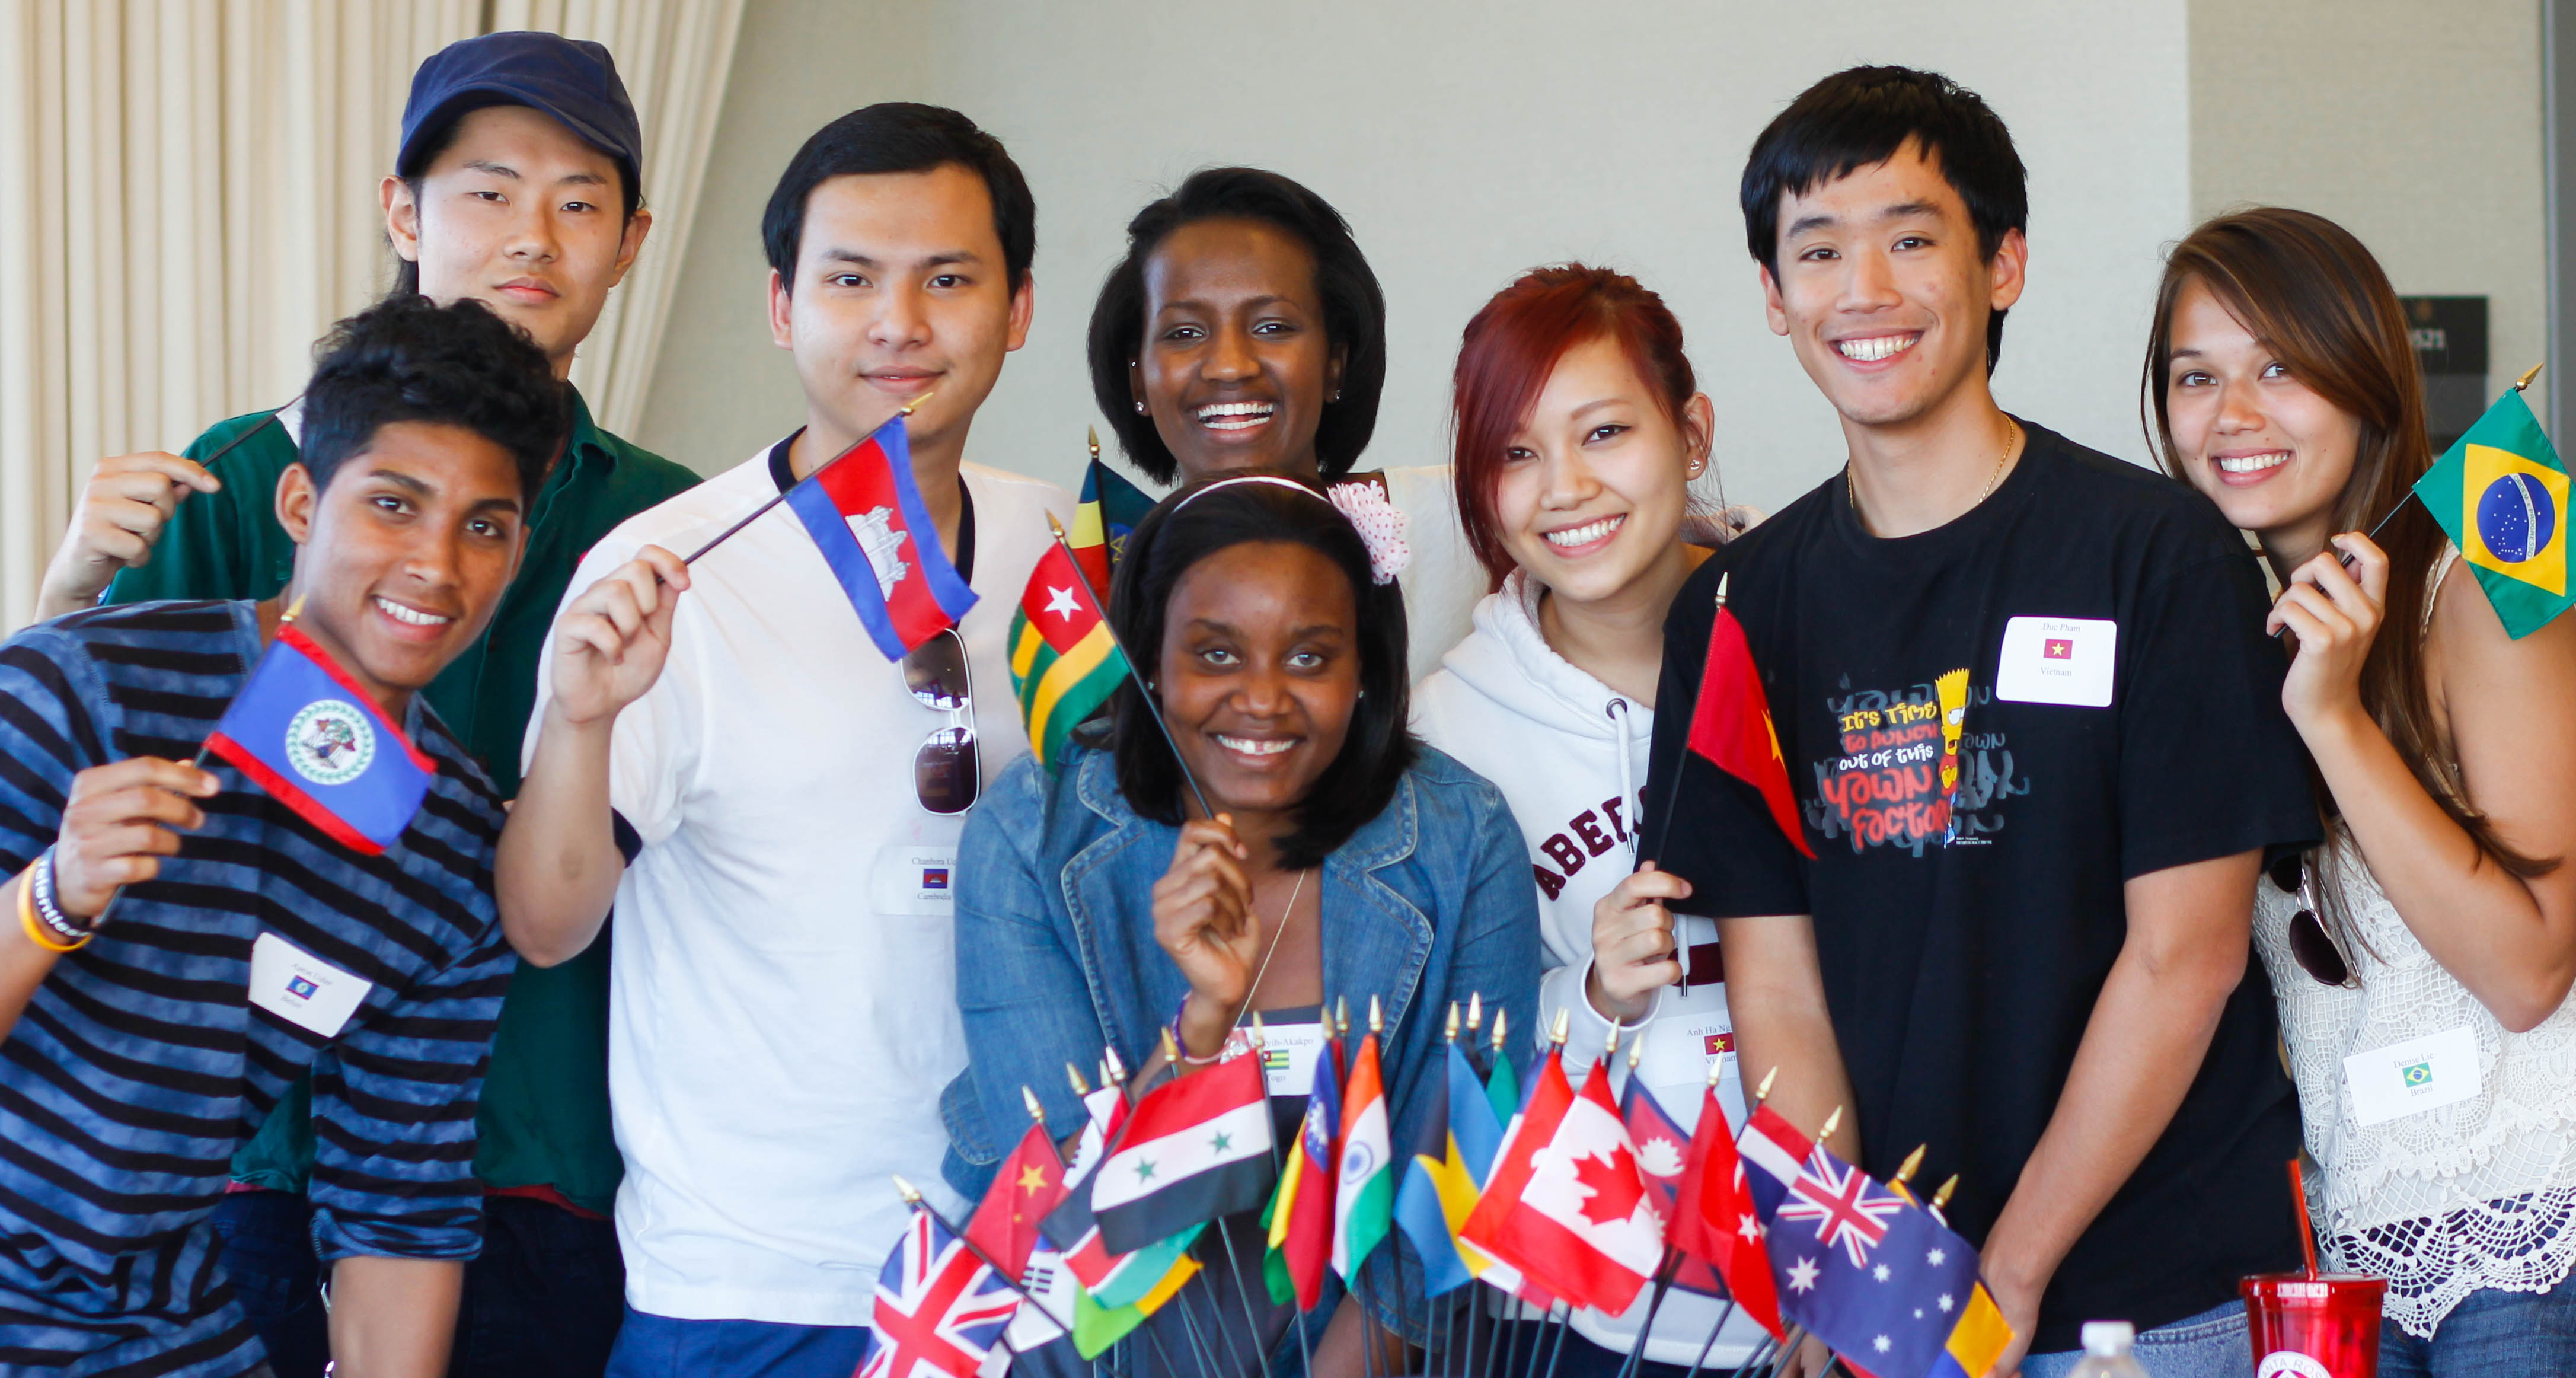 Group photo of international students